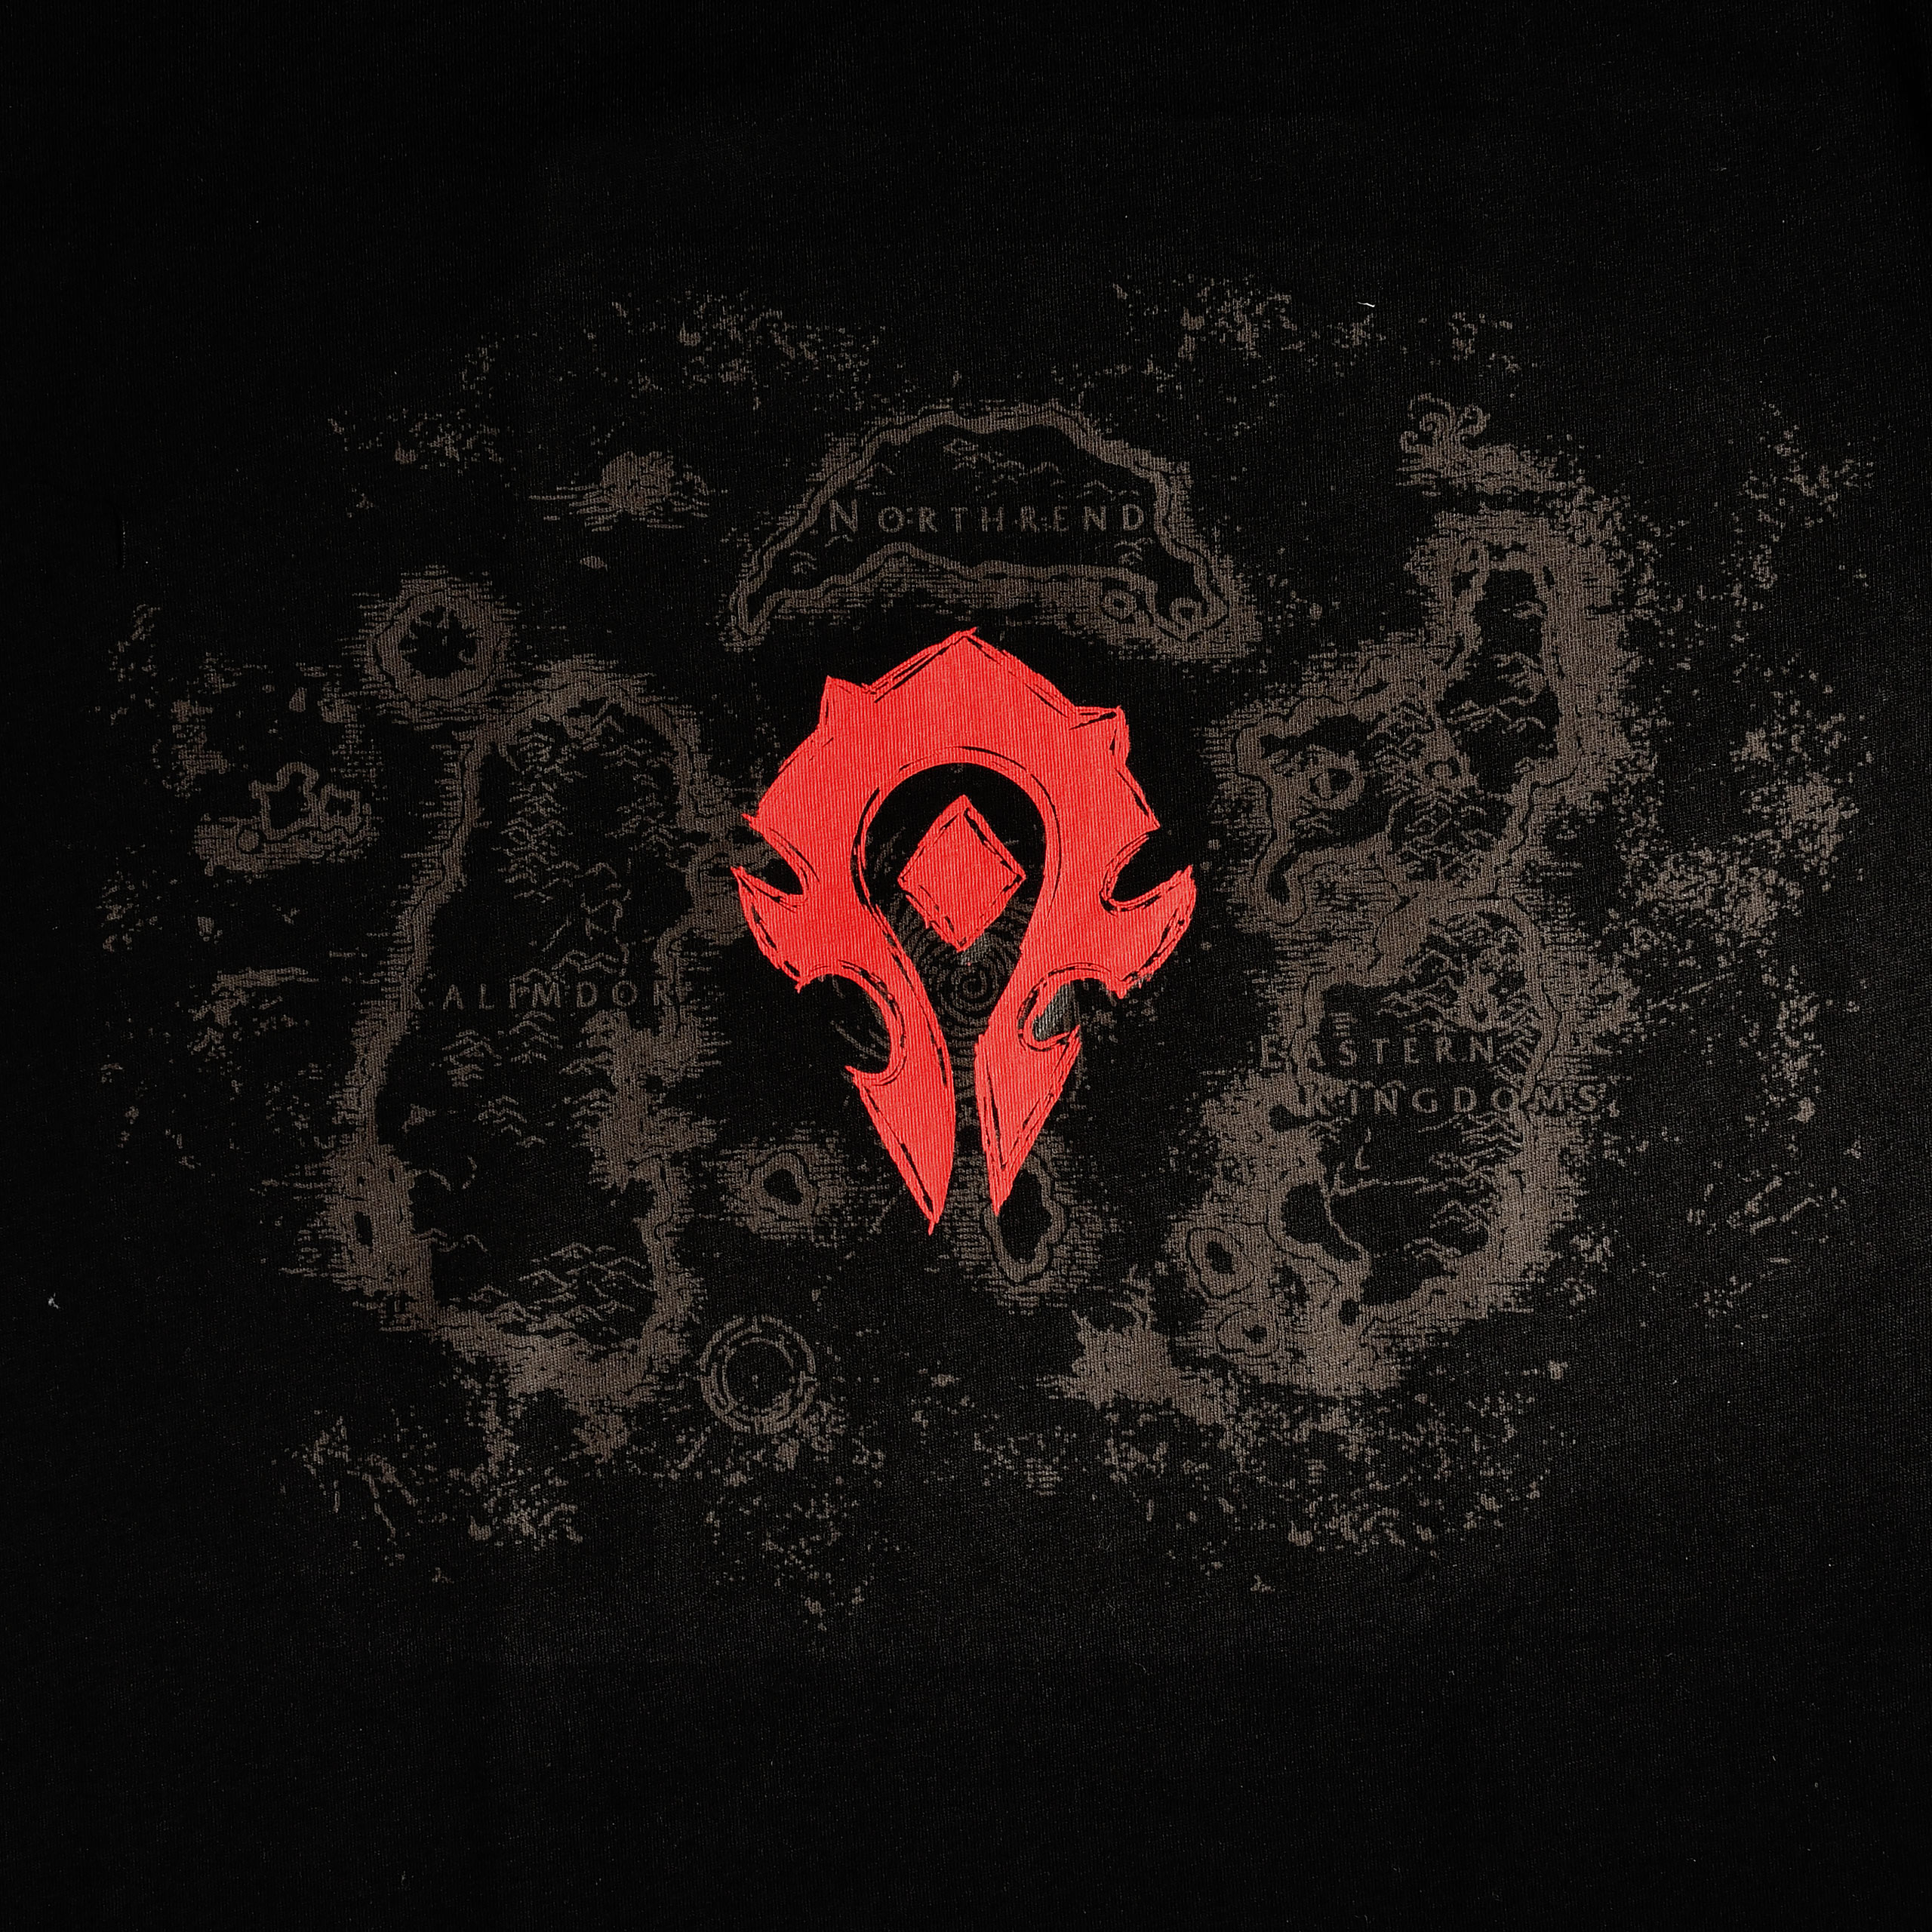 World of Warcraft - Azeroth Horde T-Shirt black